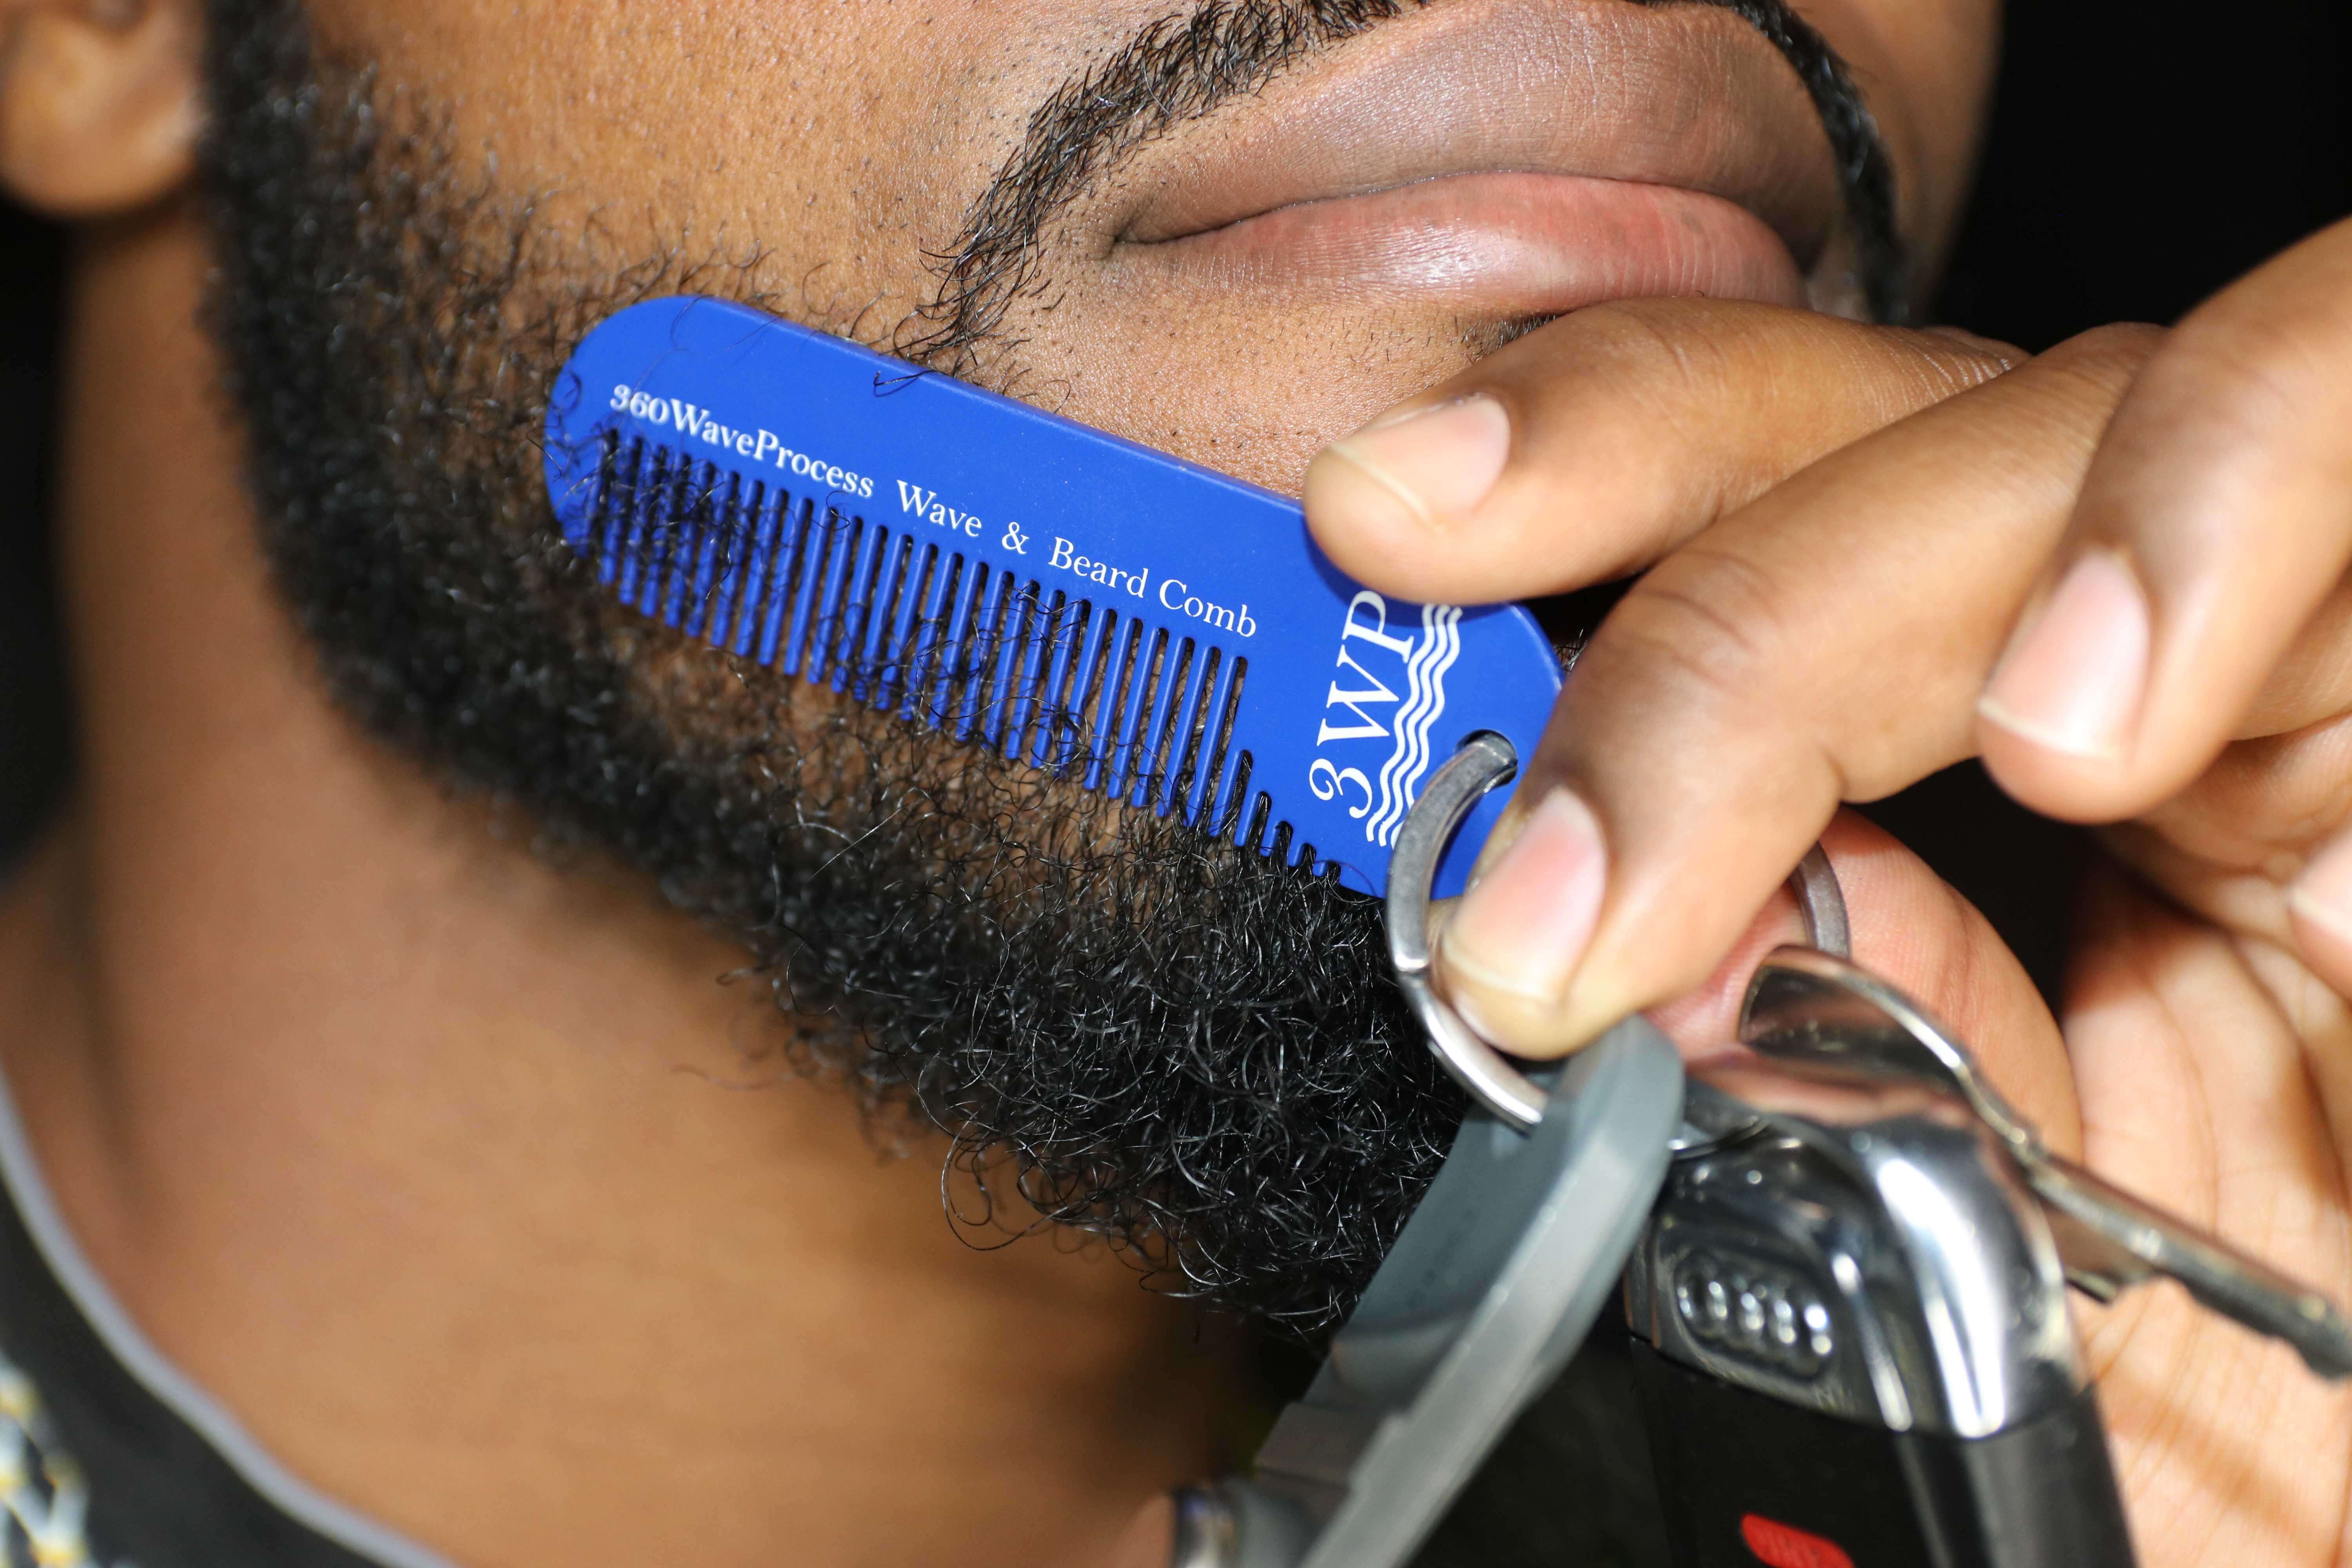 Blue Metal 3WP Wave and Beard Keychain Comb